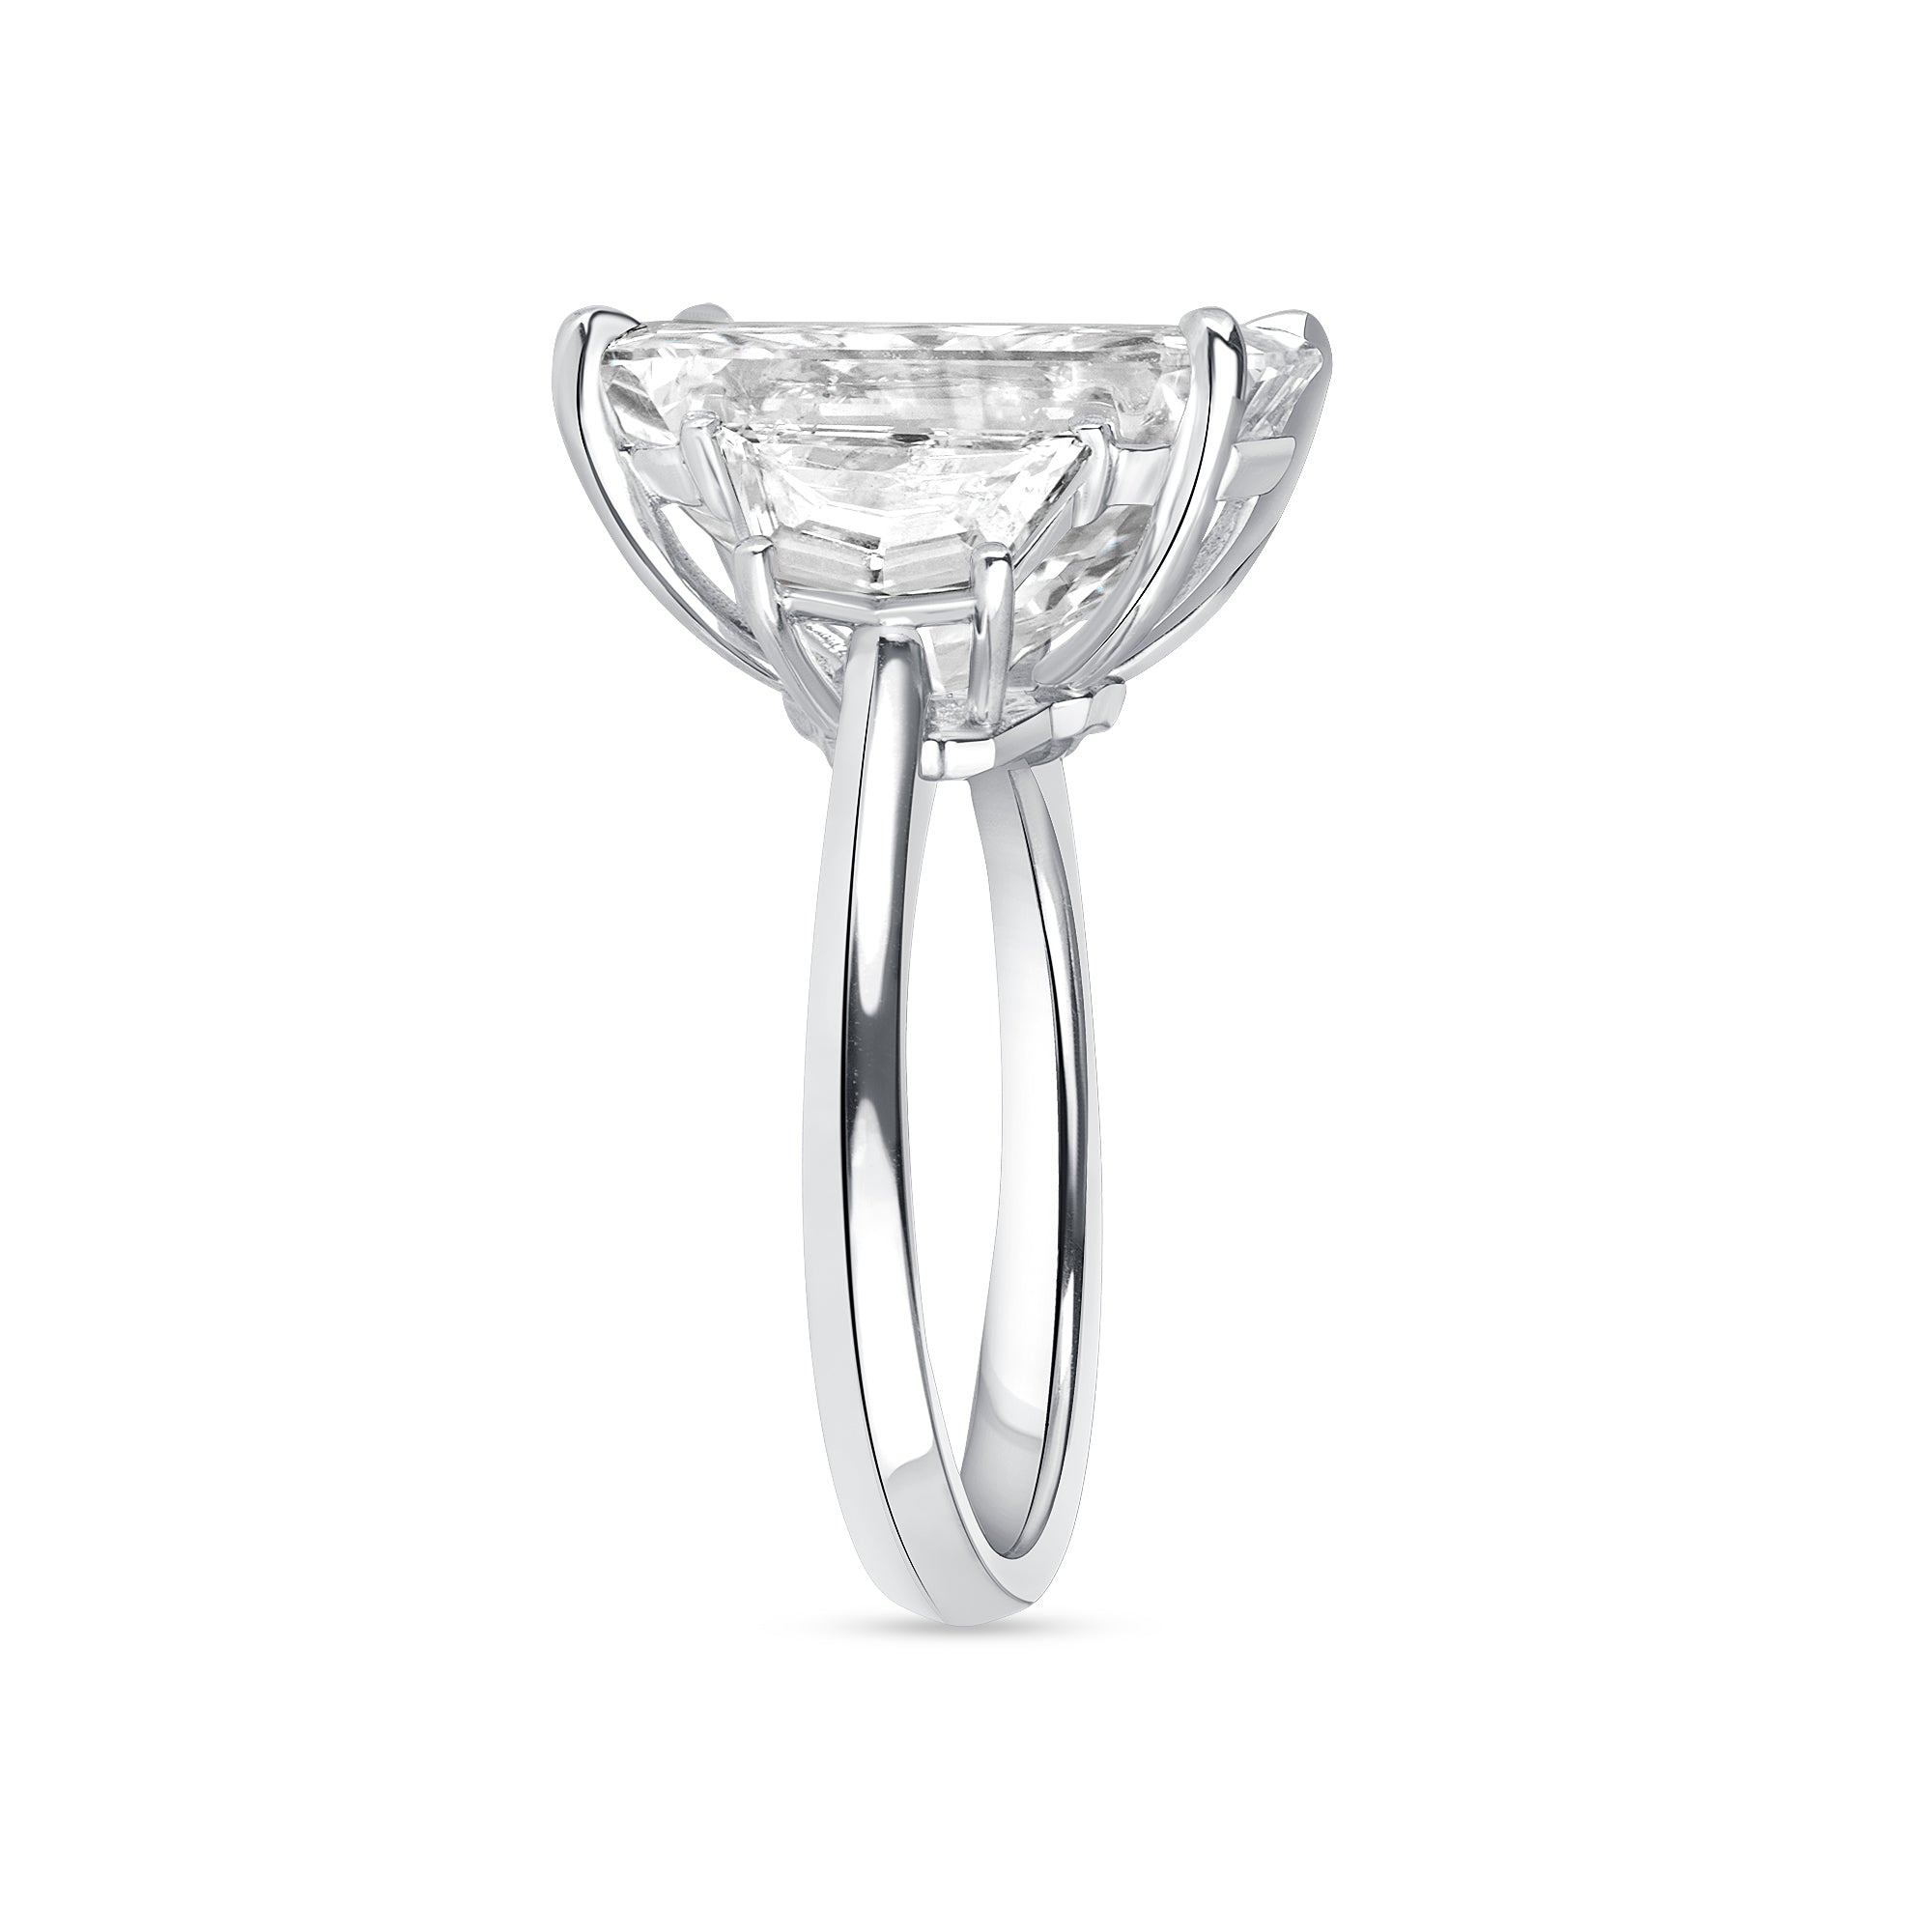 Radiant Cut Diamond and Cadillac Diamond Side Stone Ring